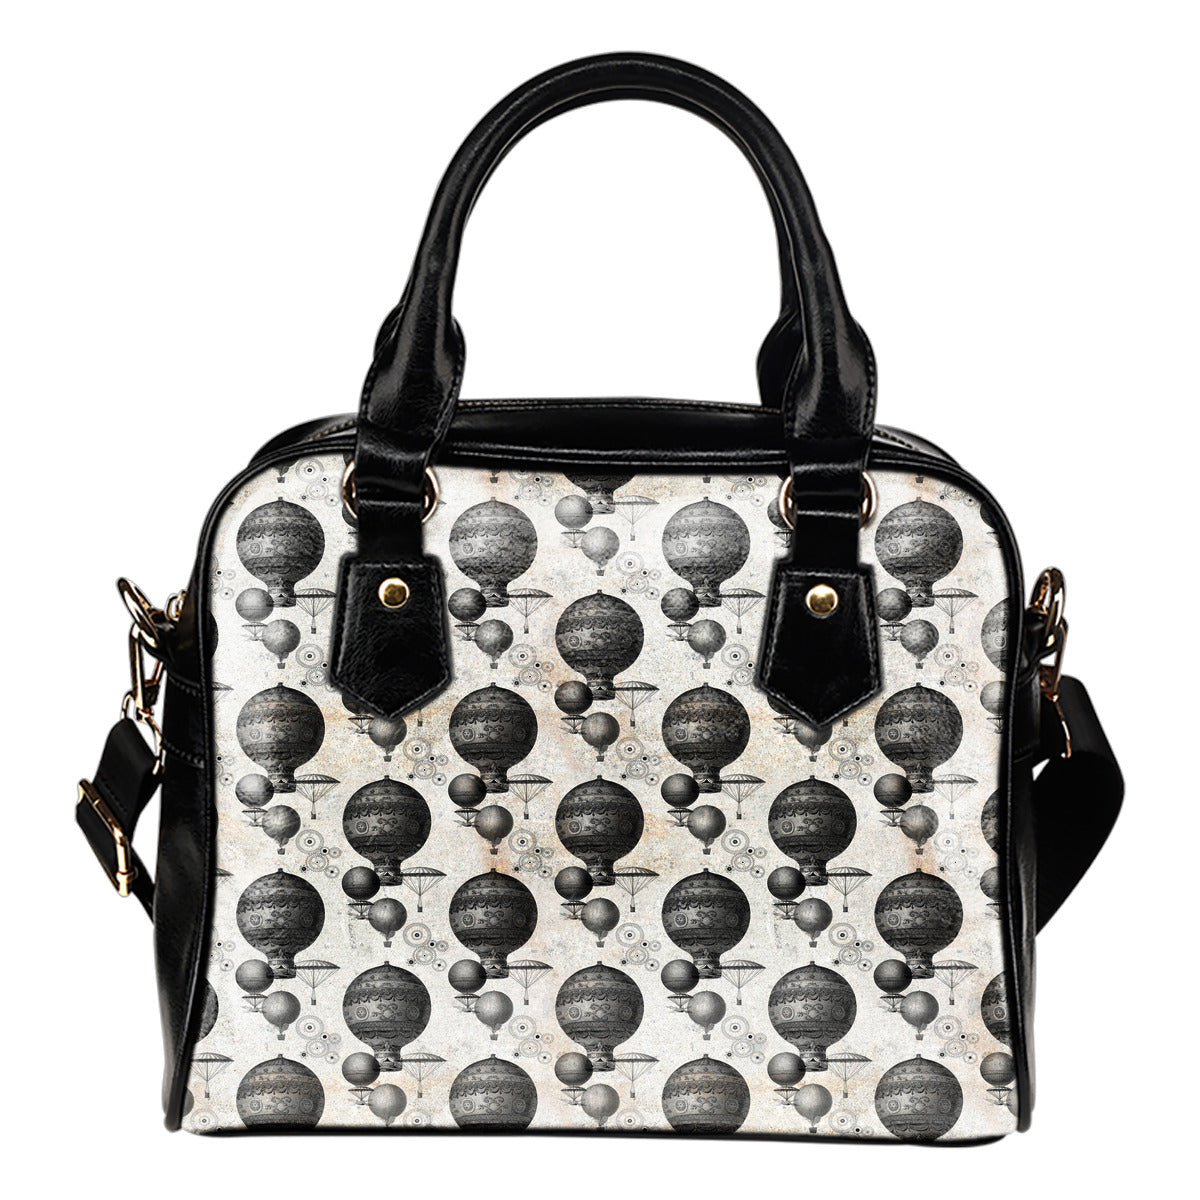 Steampunk Themed Design B15 Women Fashion Shoulder Handbag Black Vegan Faux Leather